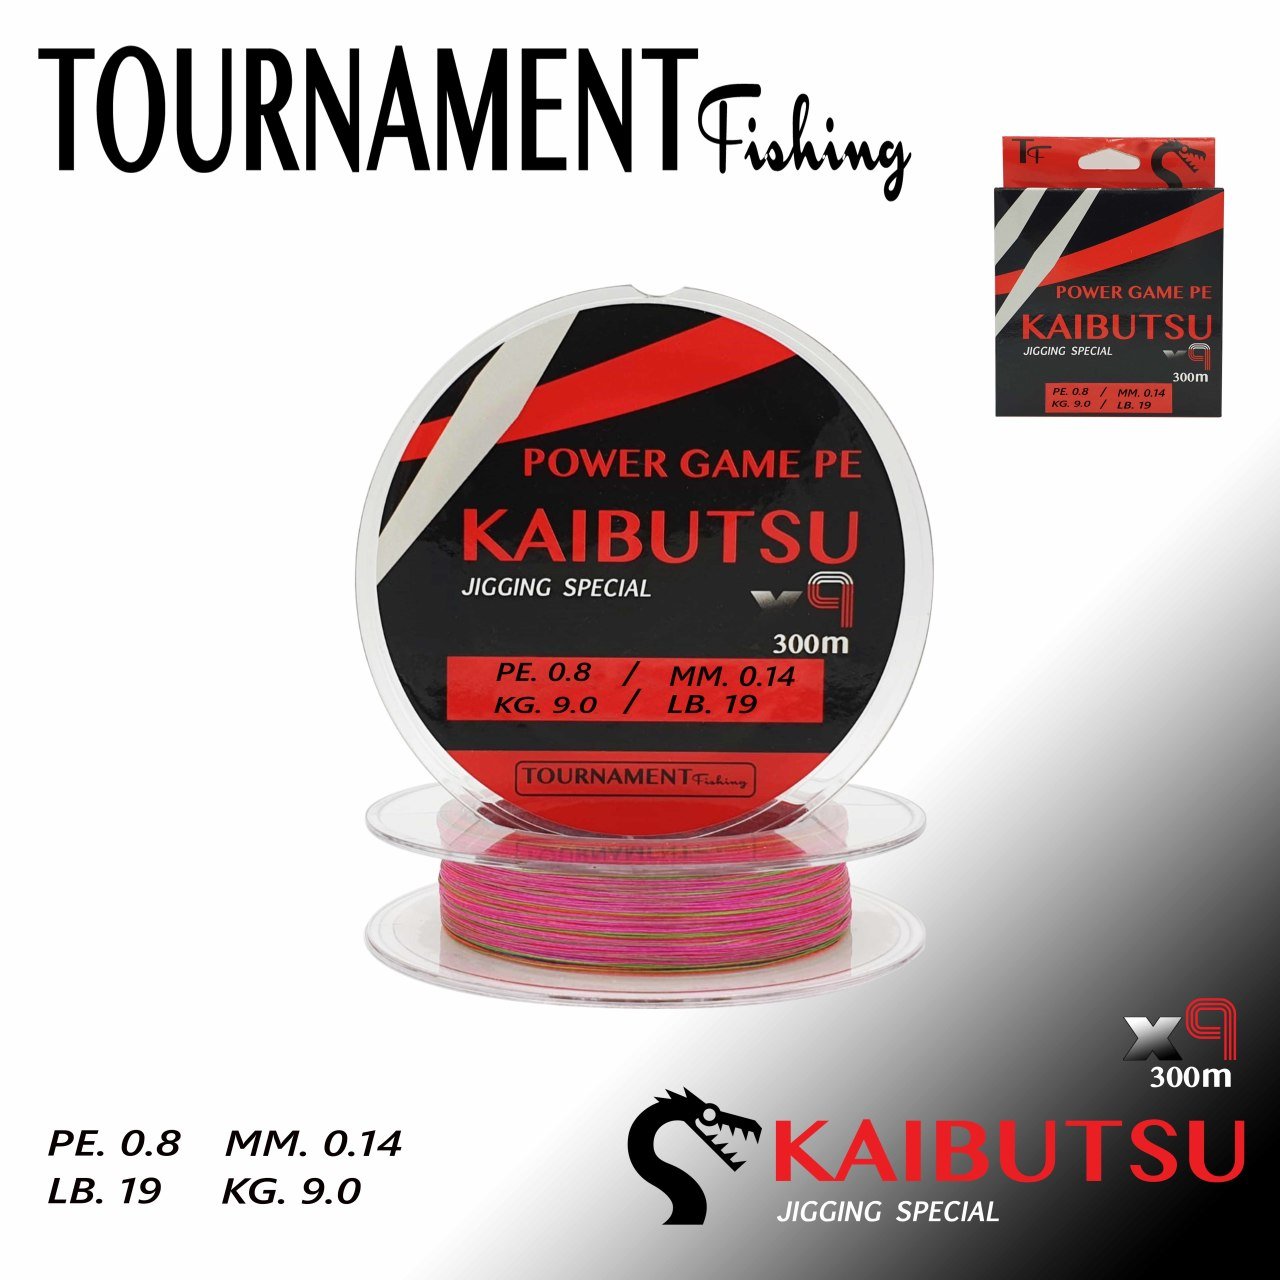 TOURNAMENT fishing Power game pe KAIBUTSU Jigging Special X9 PE.0.8/MM0.14 KG9.0/LB.19